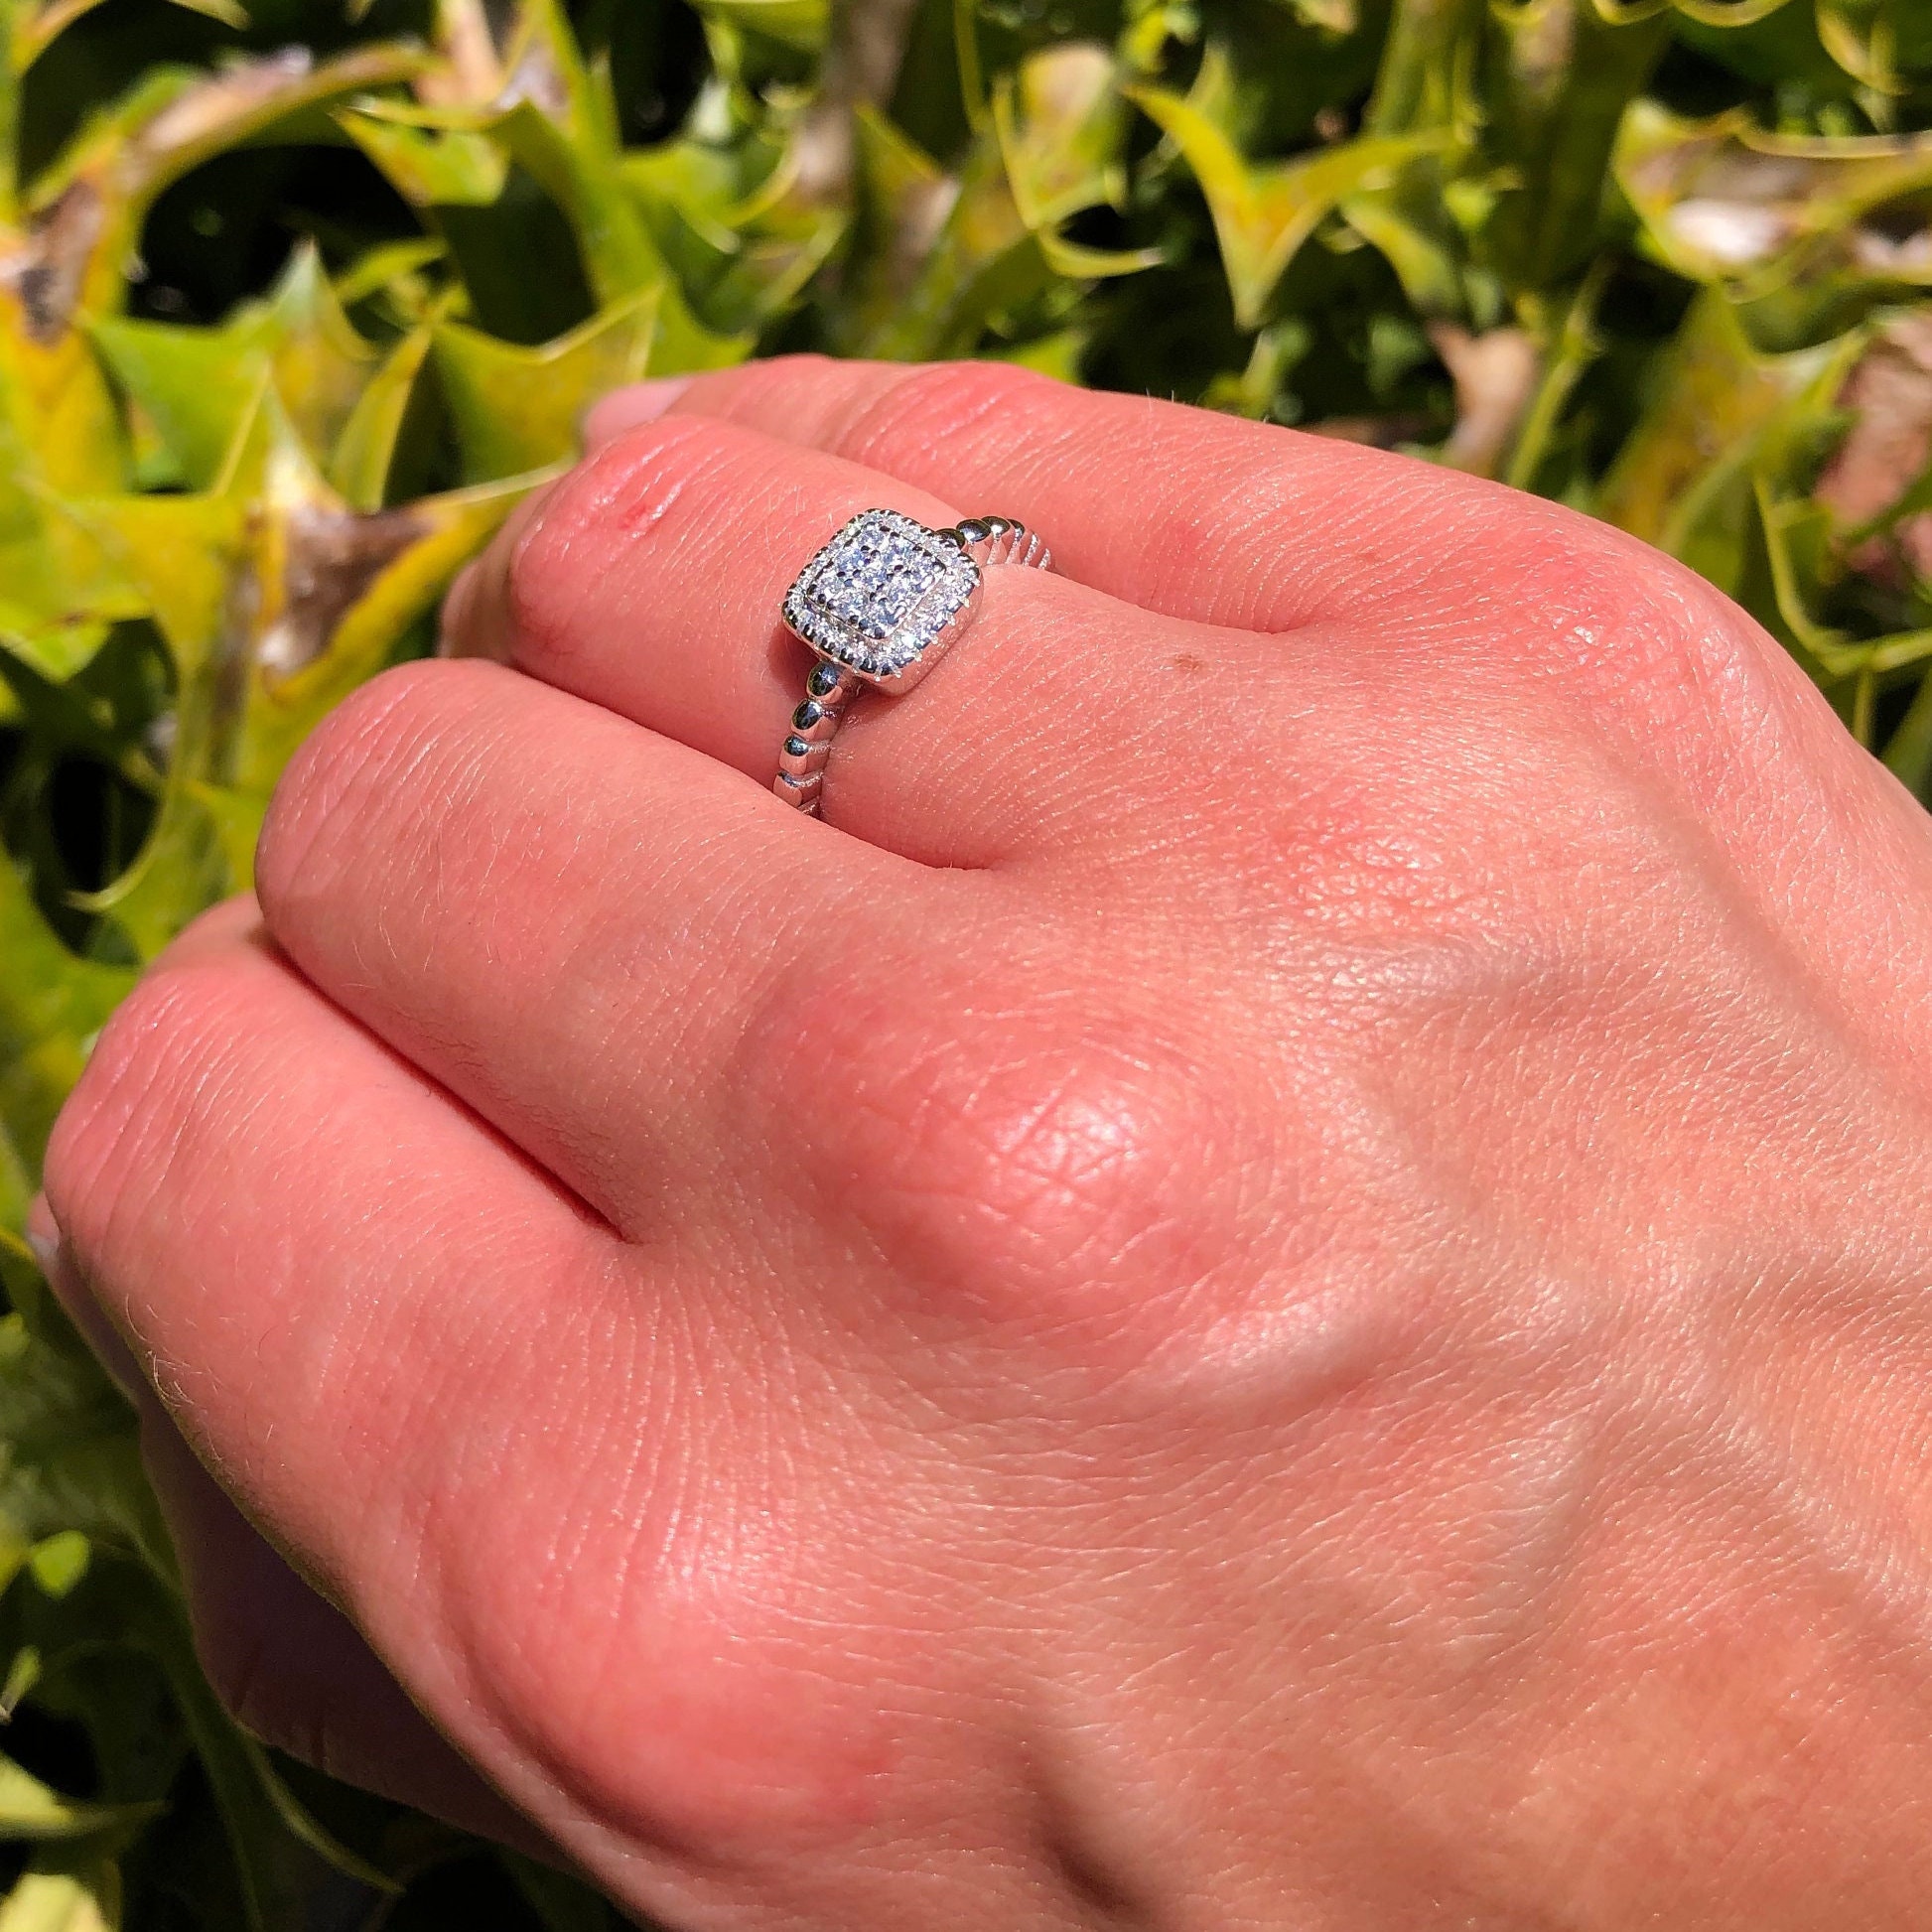 Starly: Halo Set Organic-Inspired Star Shaped Rough Grey Diamond Engagement  Ring